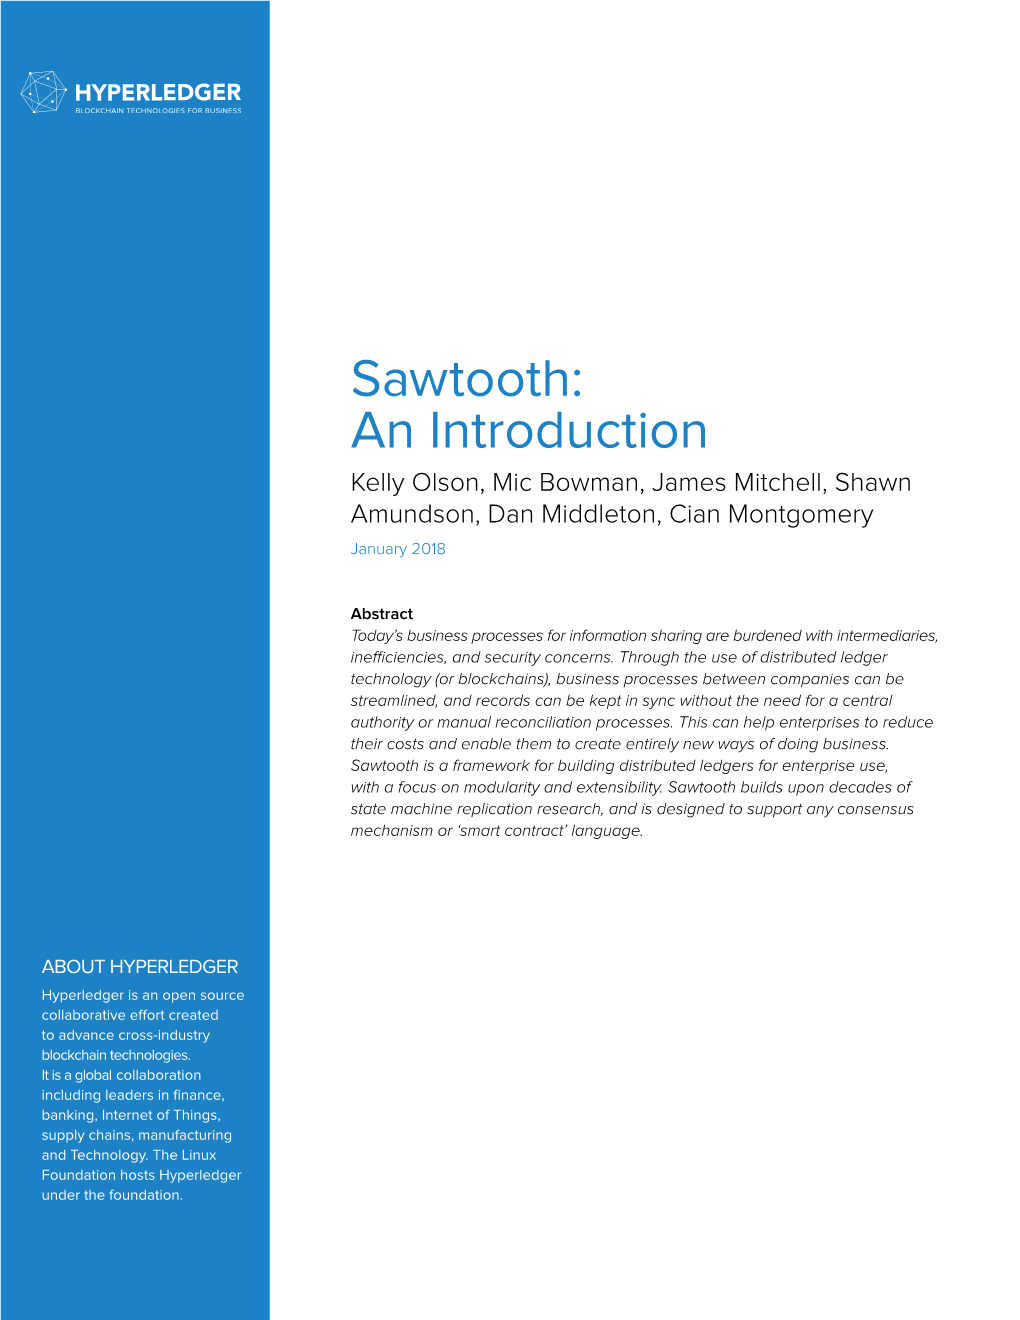 Sawtooth: an Introduction Kelly Olson, Mic Bowman, James Mitchell, Shawn Amundson, Dan Middleton, Cian Montgomery January 2018